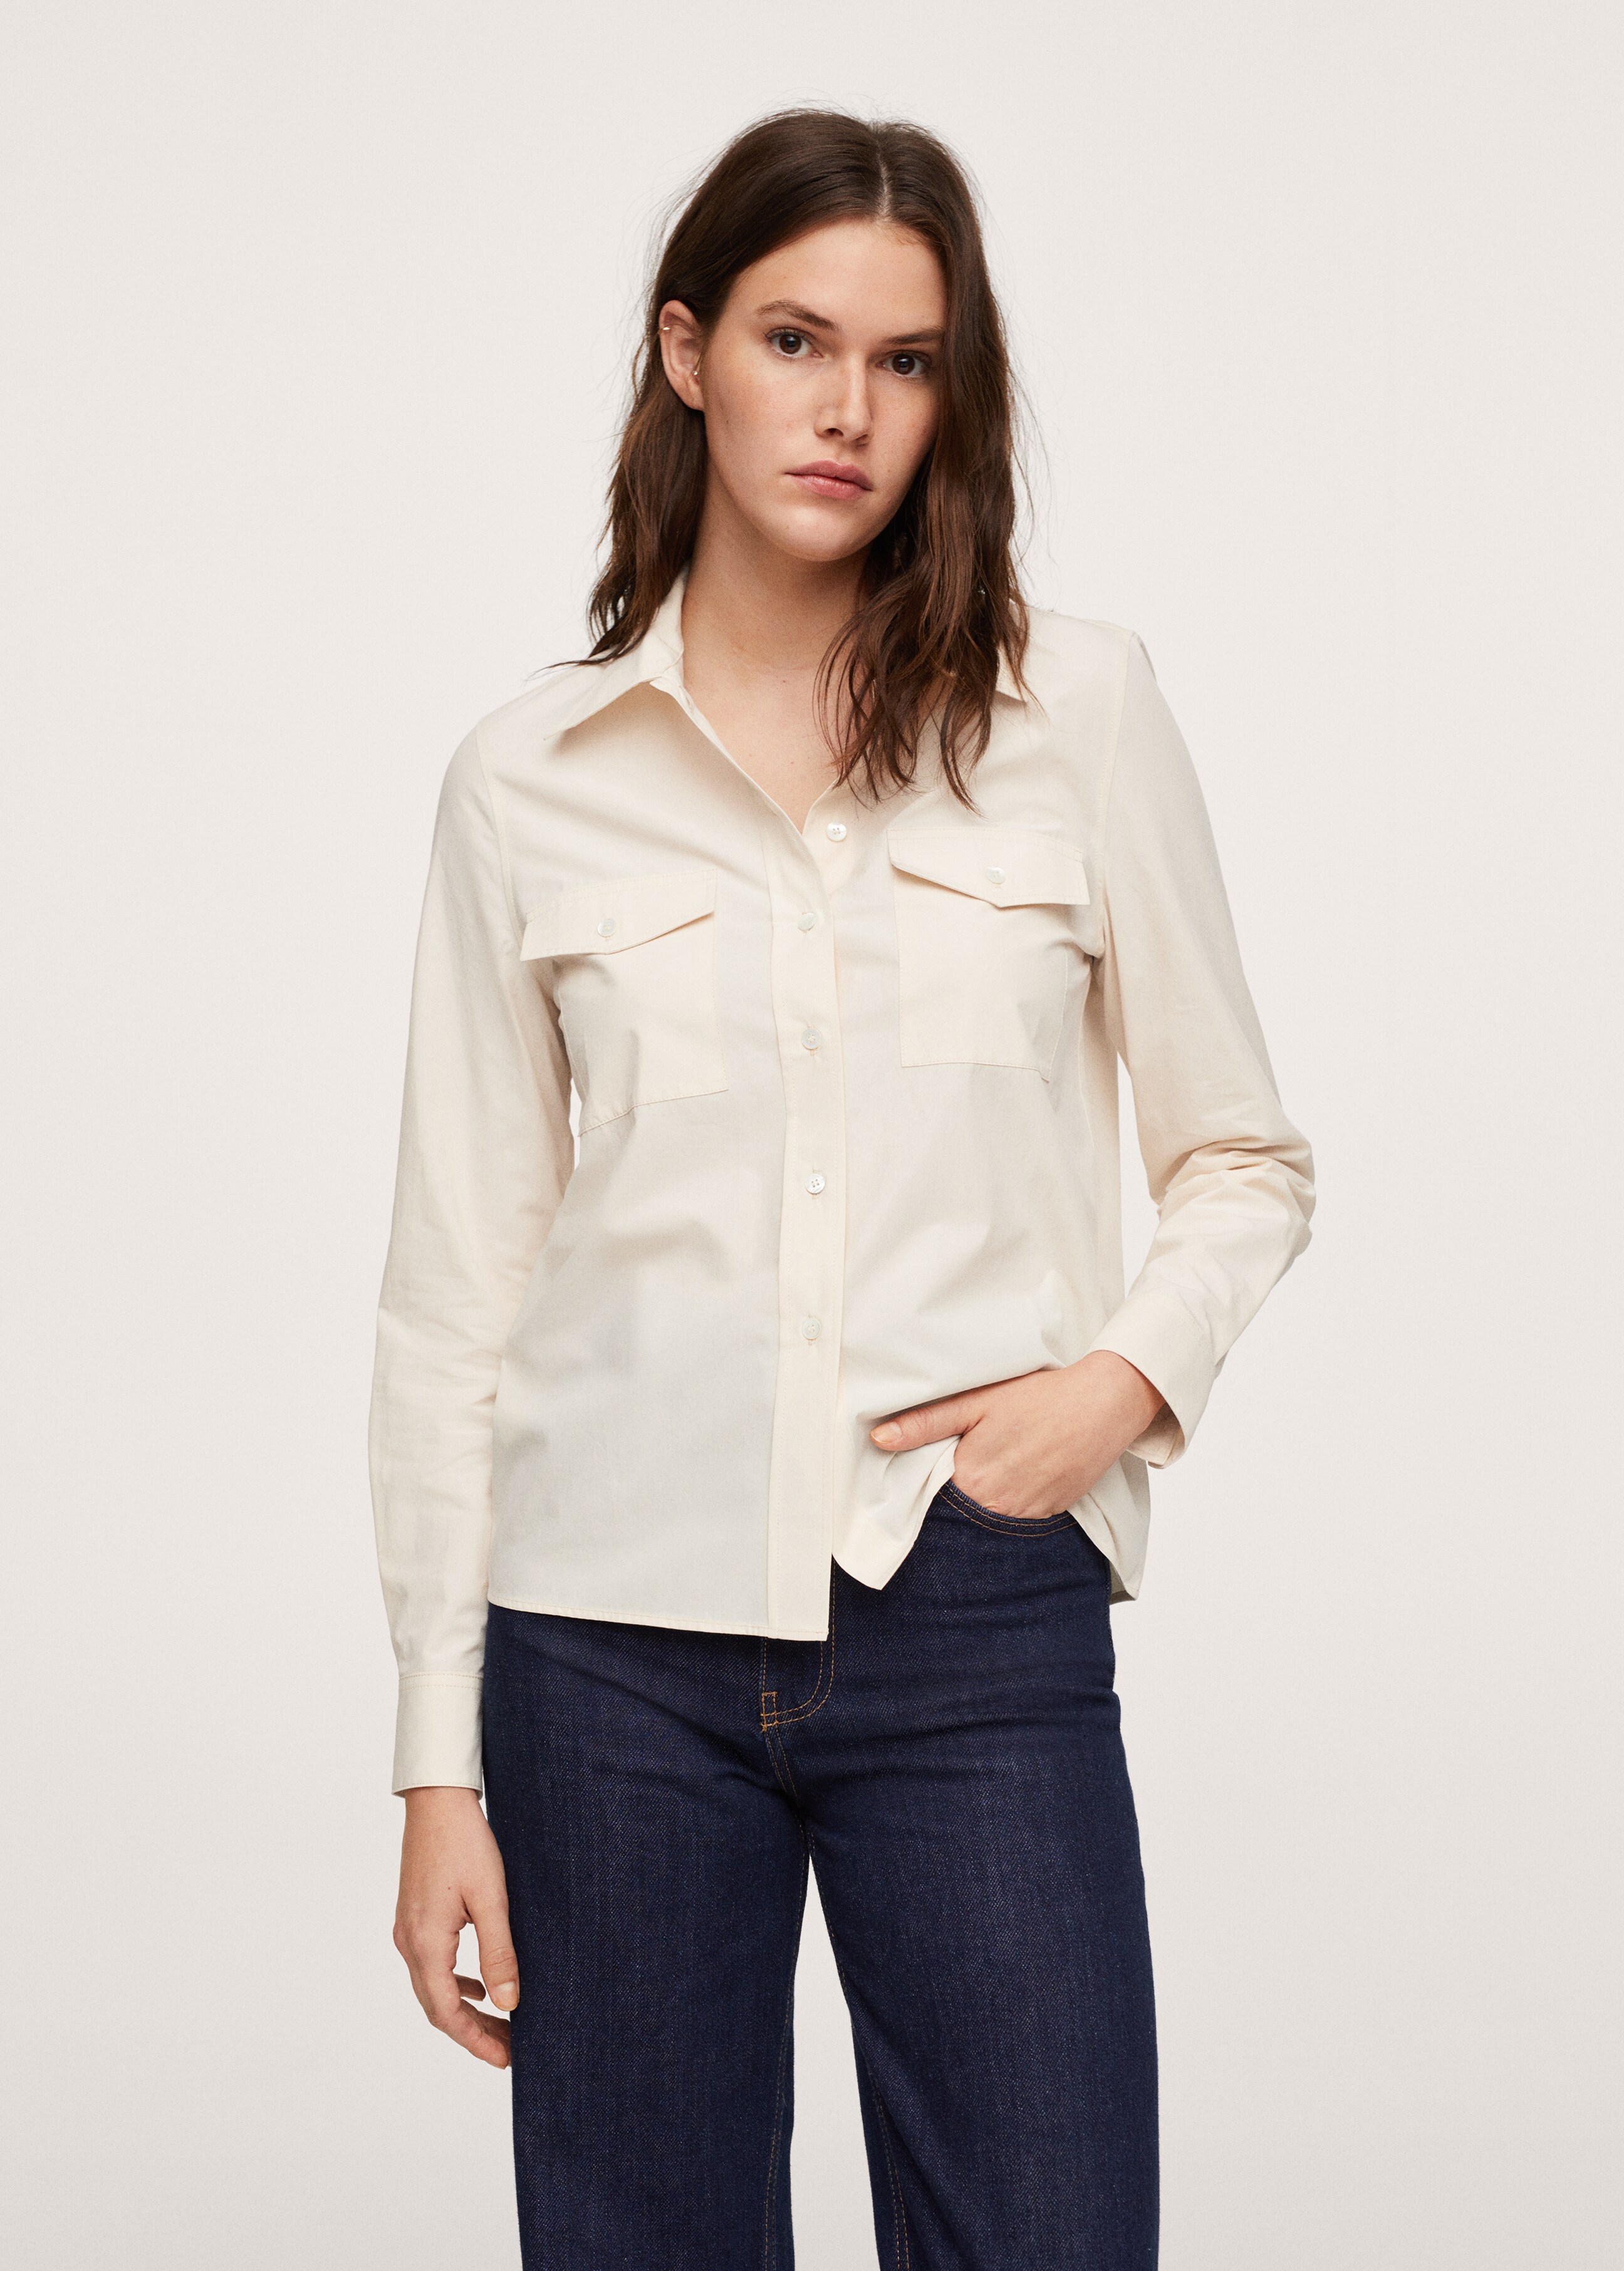 Chest-pocket cotton shirt - Medium plane